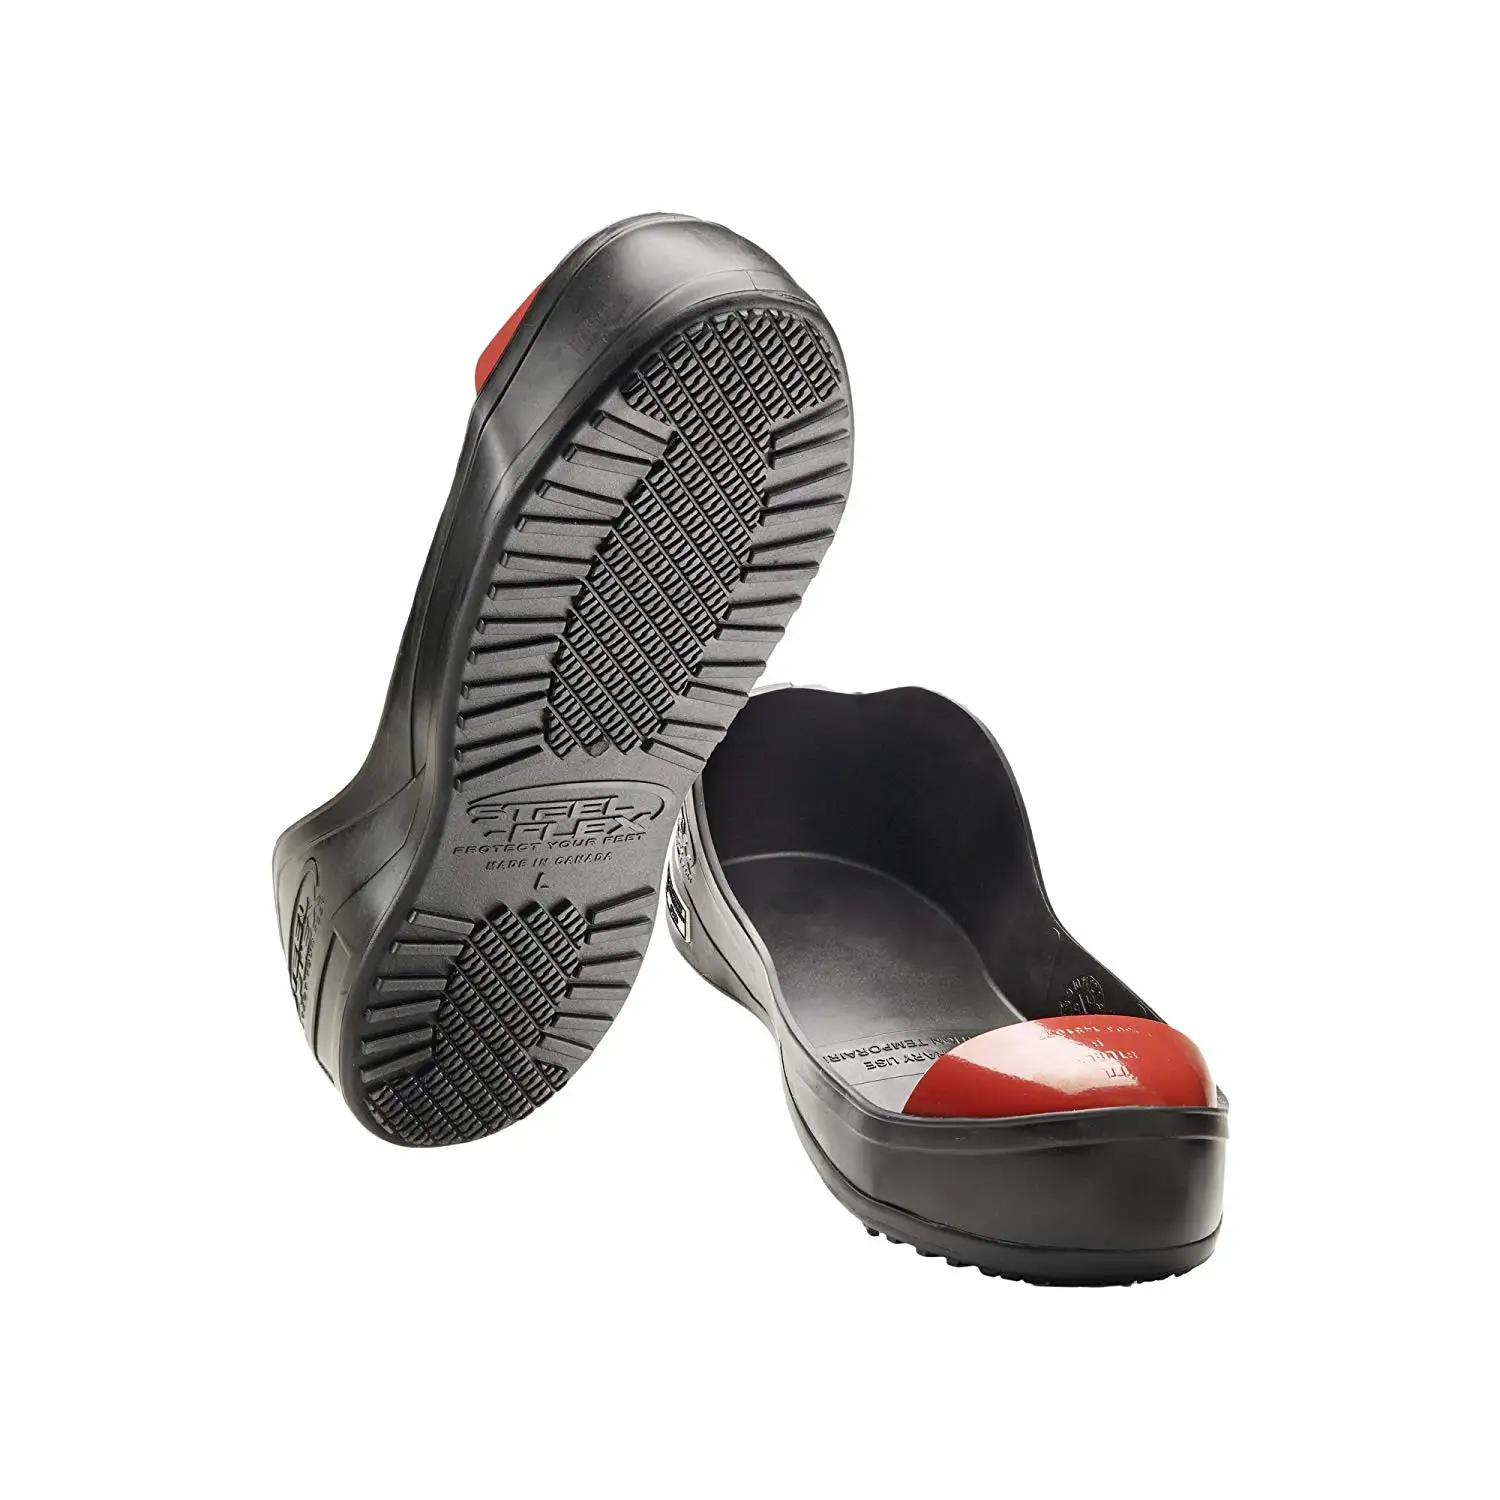 Cheap Steel Toe Crocs, find Steel Toe Crocs deals on line at Alibaba.com